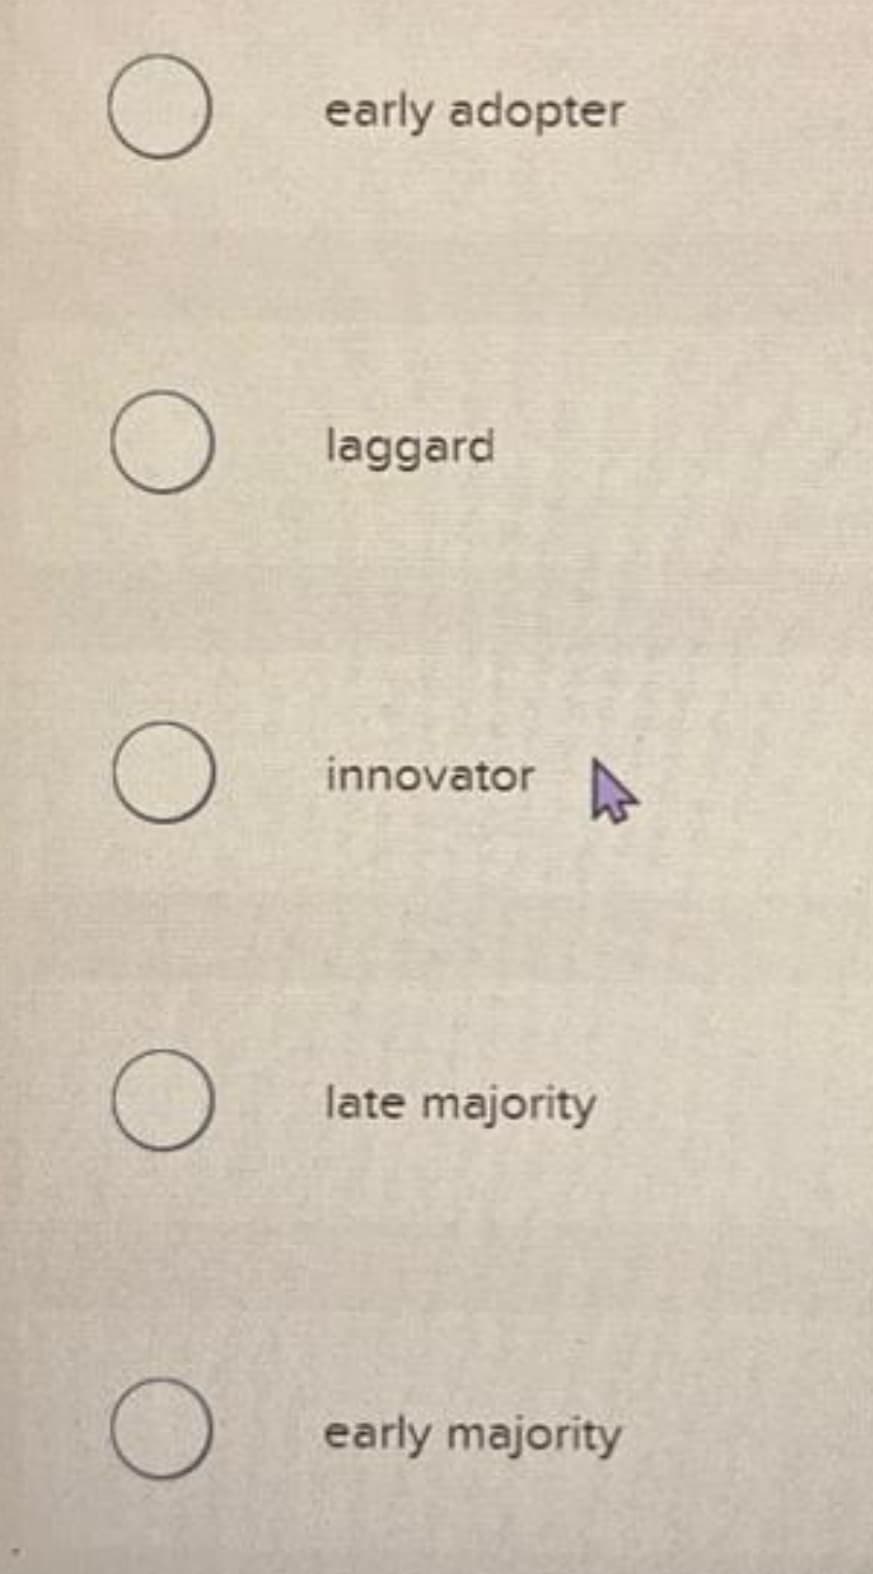 O
O
O
O
O
early adopter
laggard
innovator A
late majority
early majority